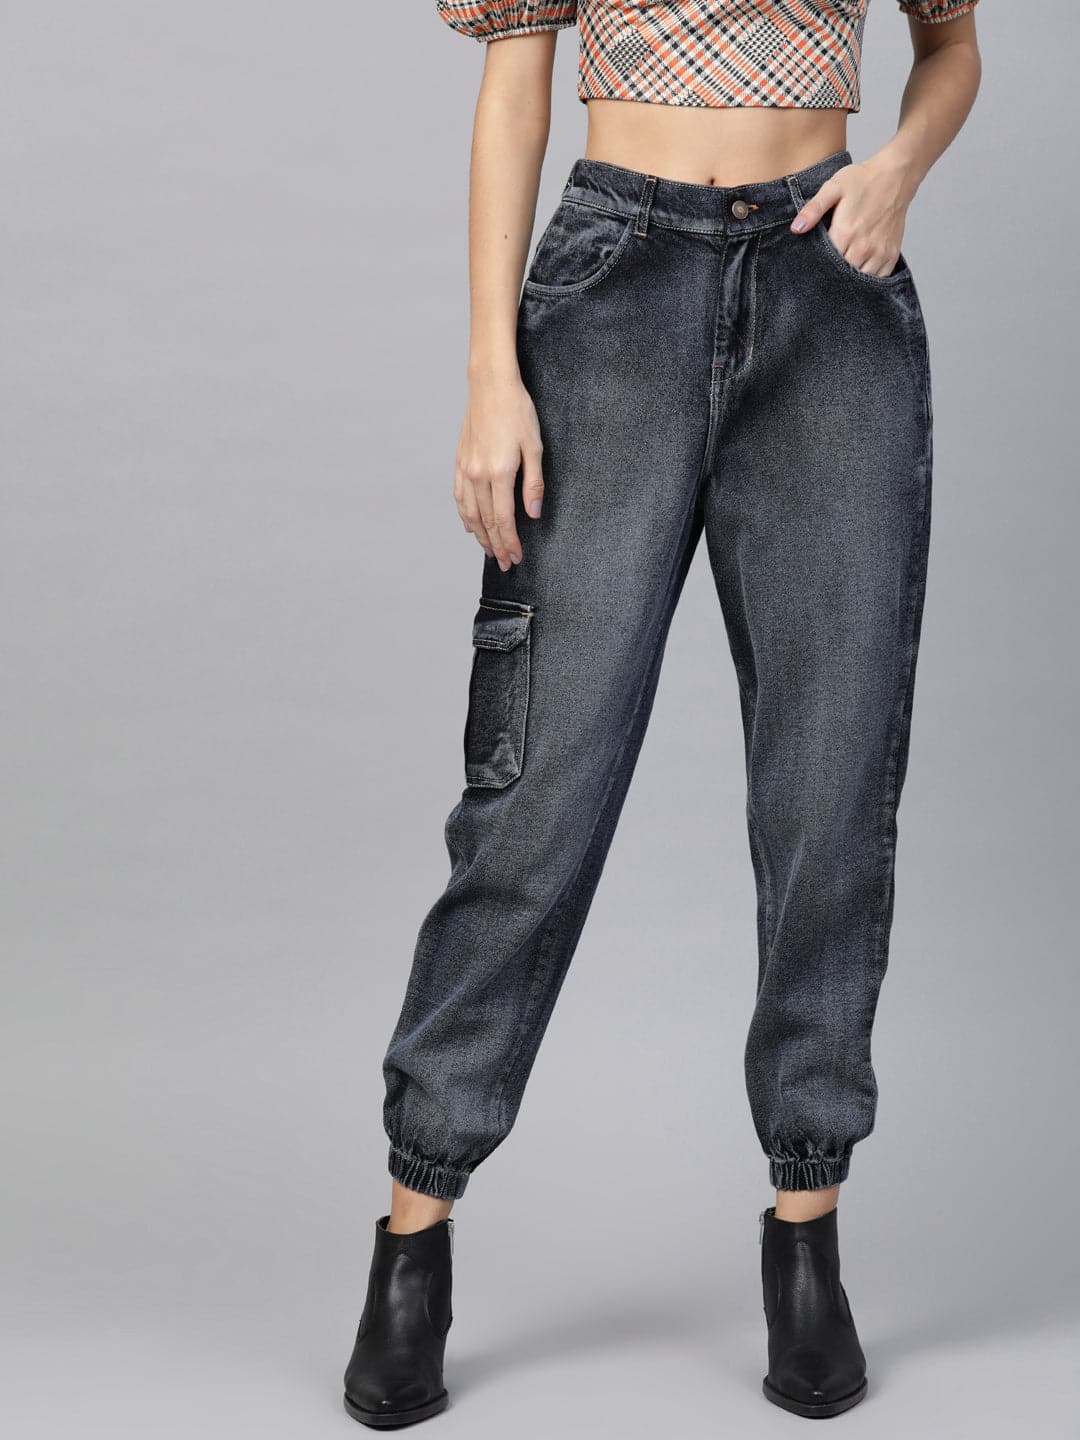 Navy Washed Street Wear Jogger Jeans-Jeans-SASSAFRAS